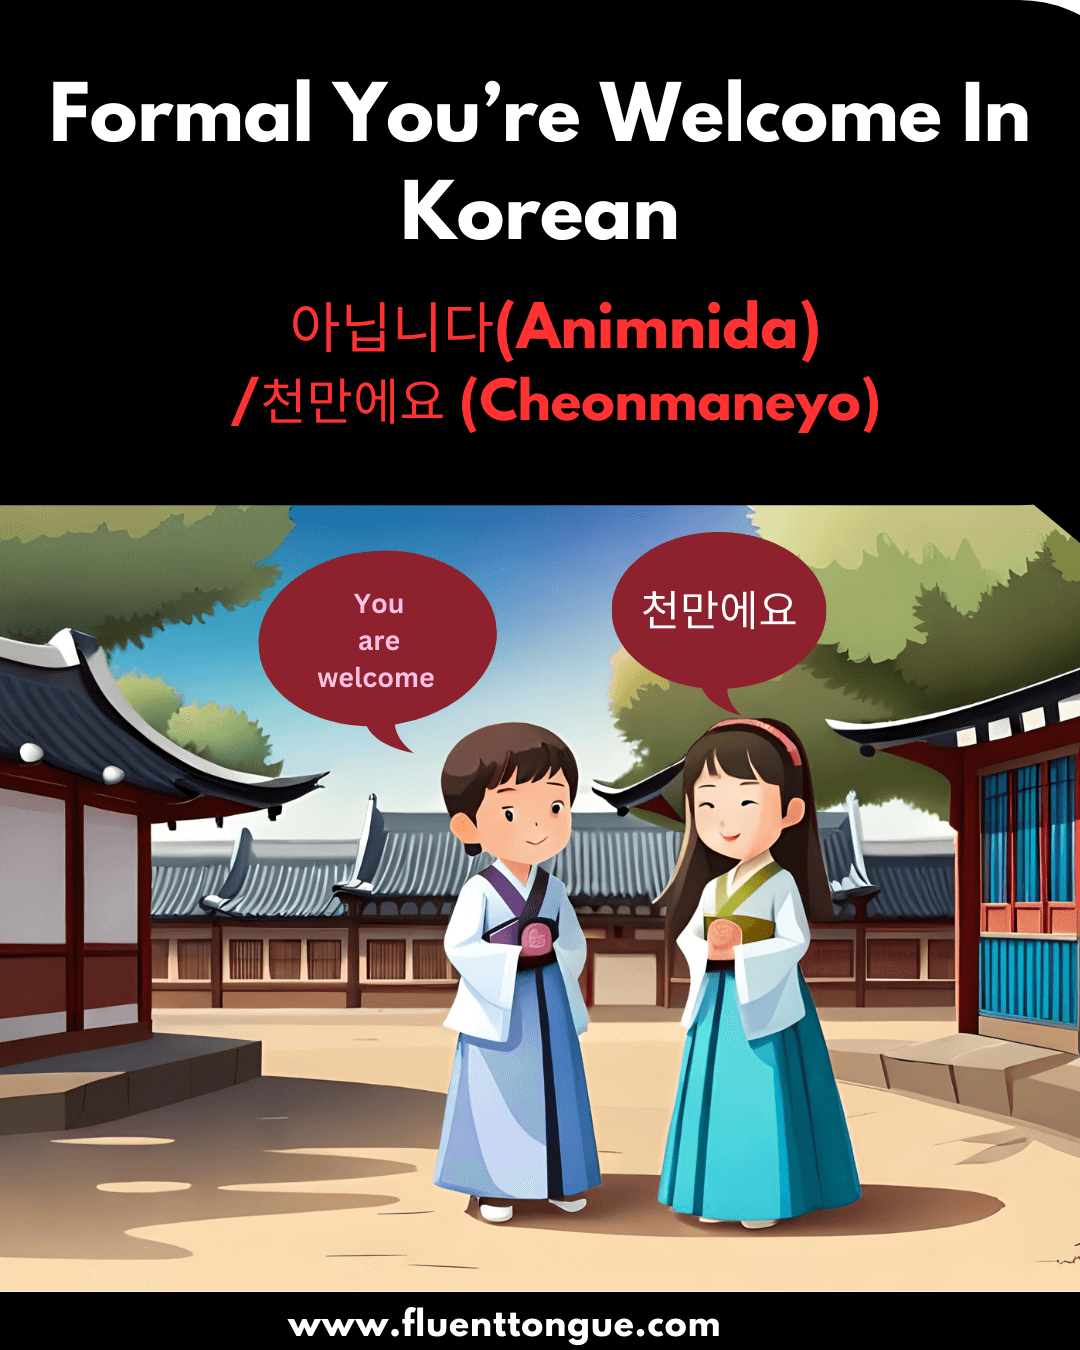 Formal You're Welcome in Korean- 아닙니다 (animnida) / 천만에요 (cheonmaneyo)